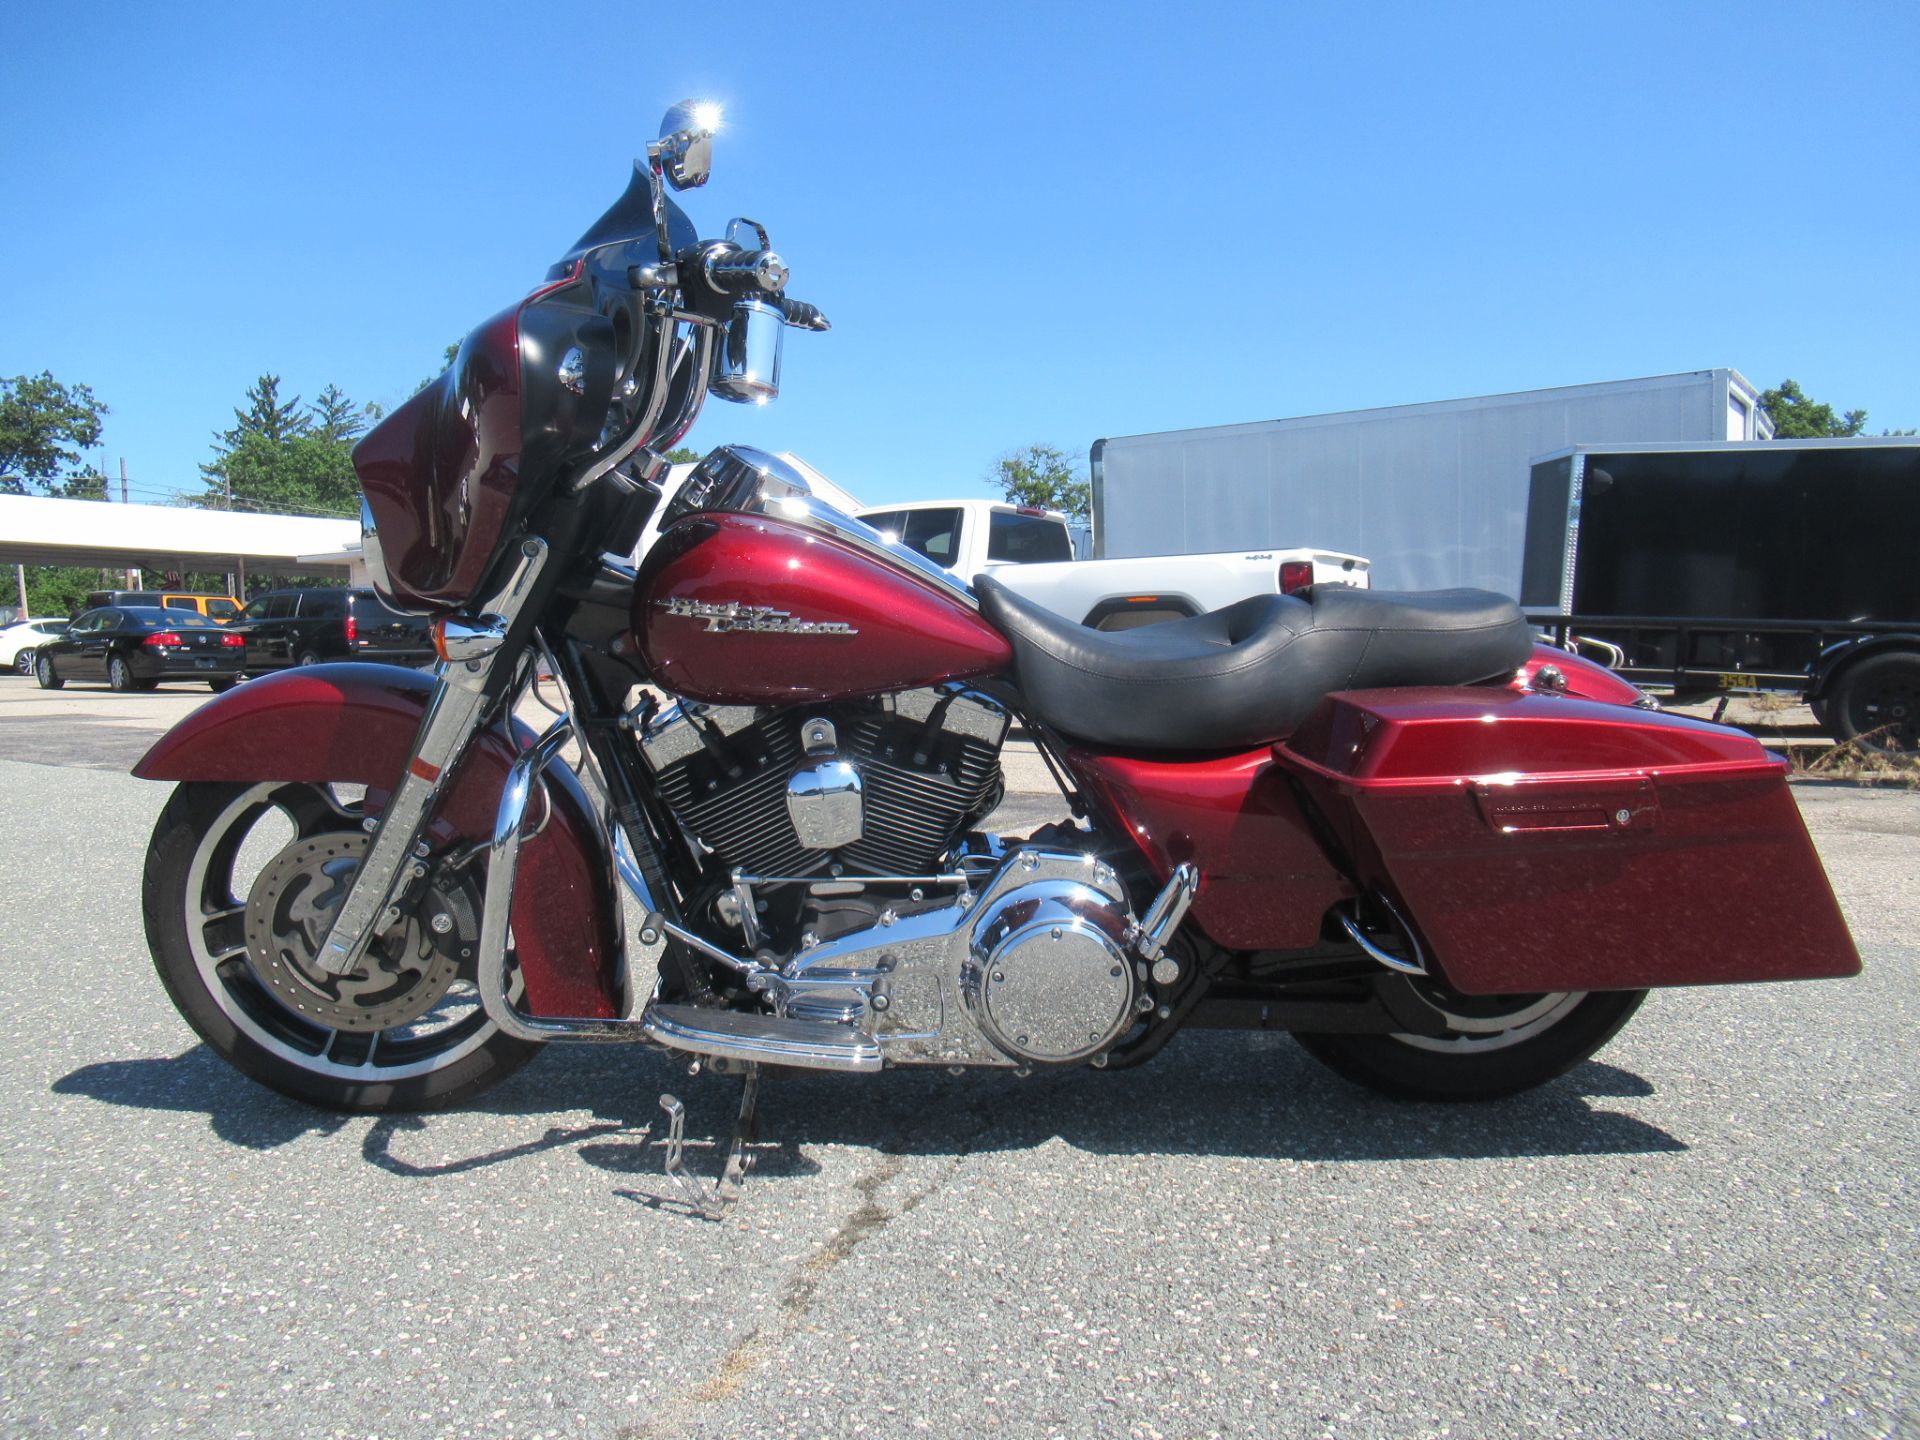 2010 Harley-Davidson Street Glide® in Springfield, Massachusetts - Photo 4